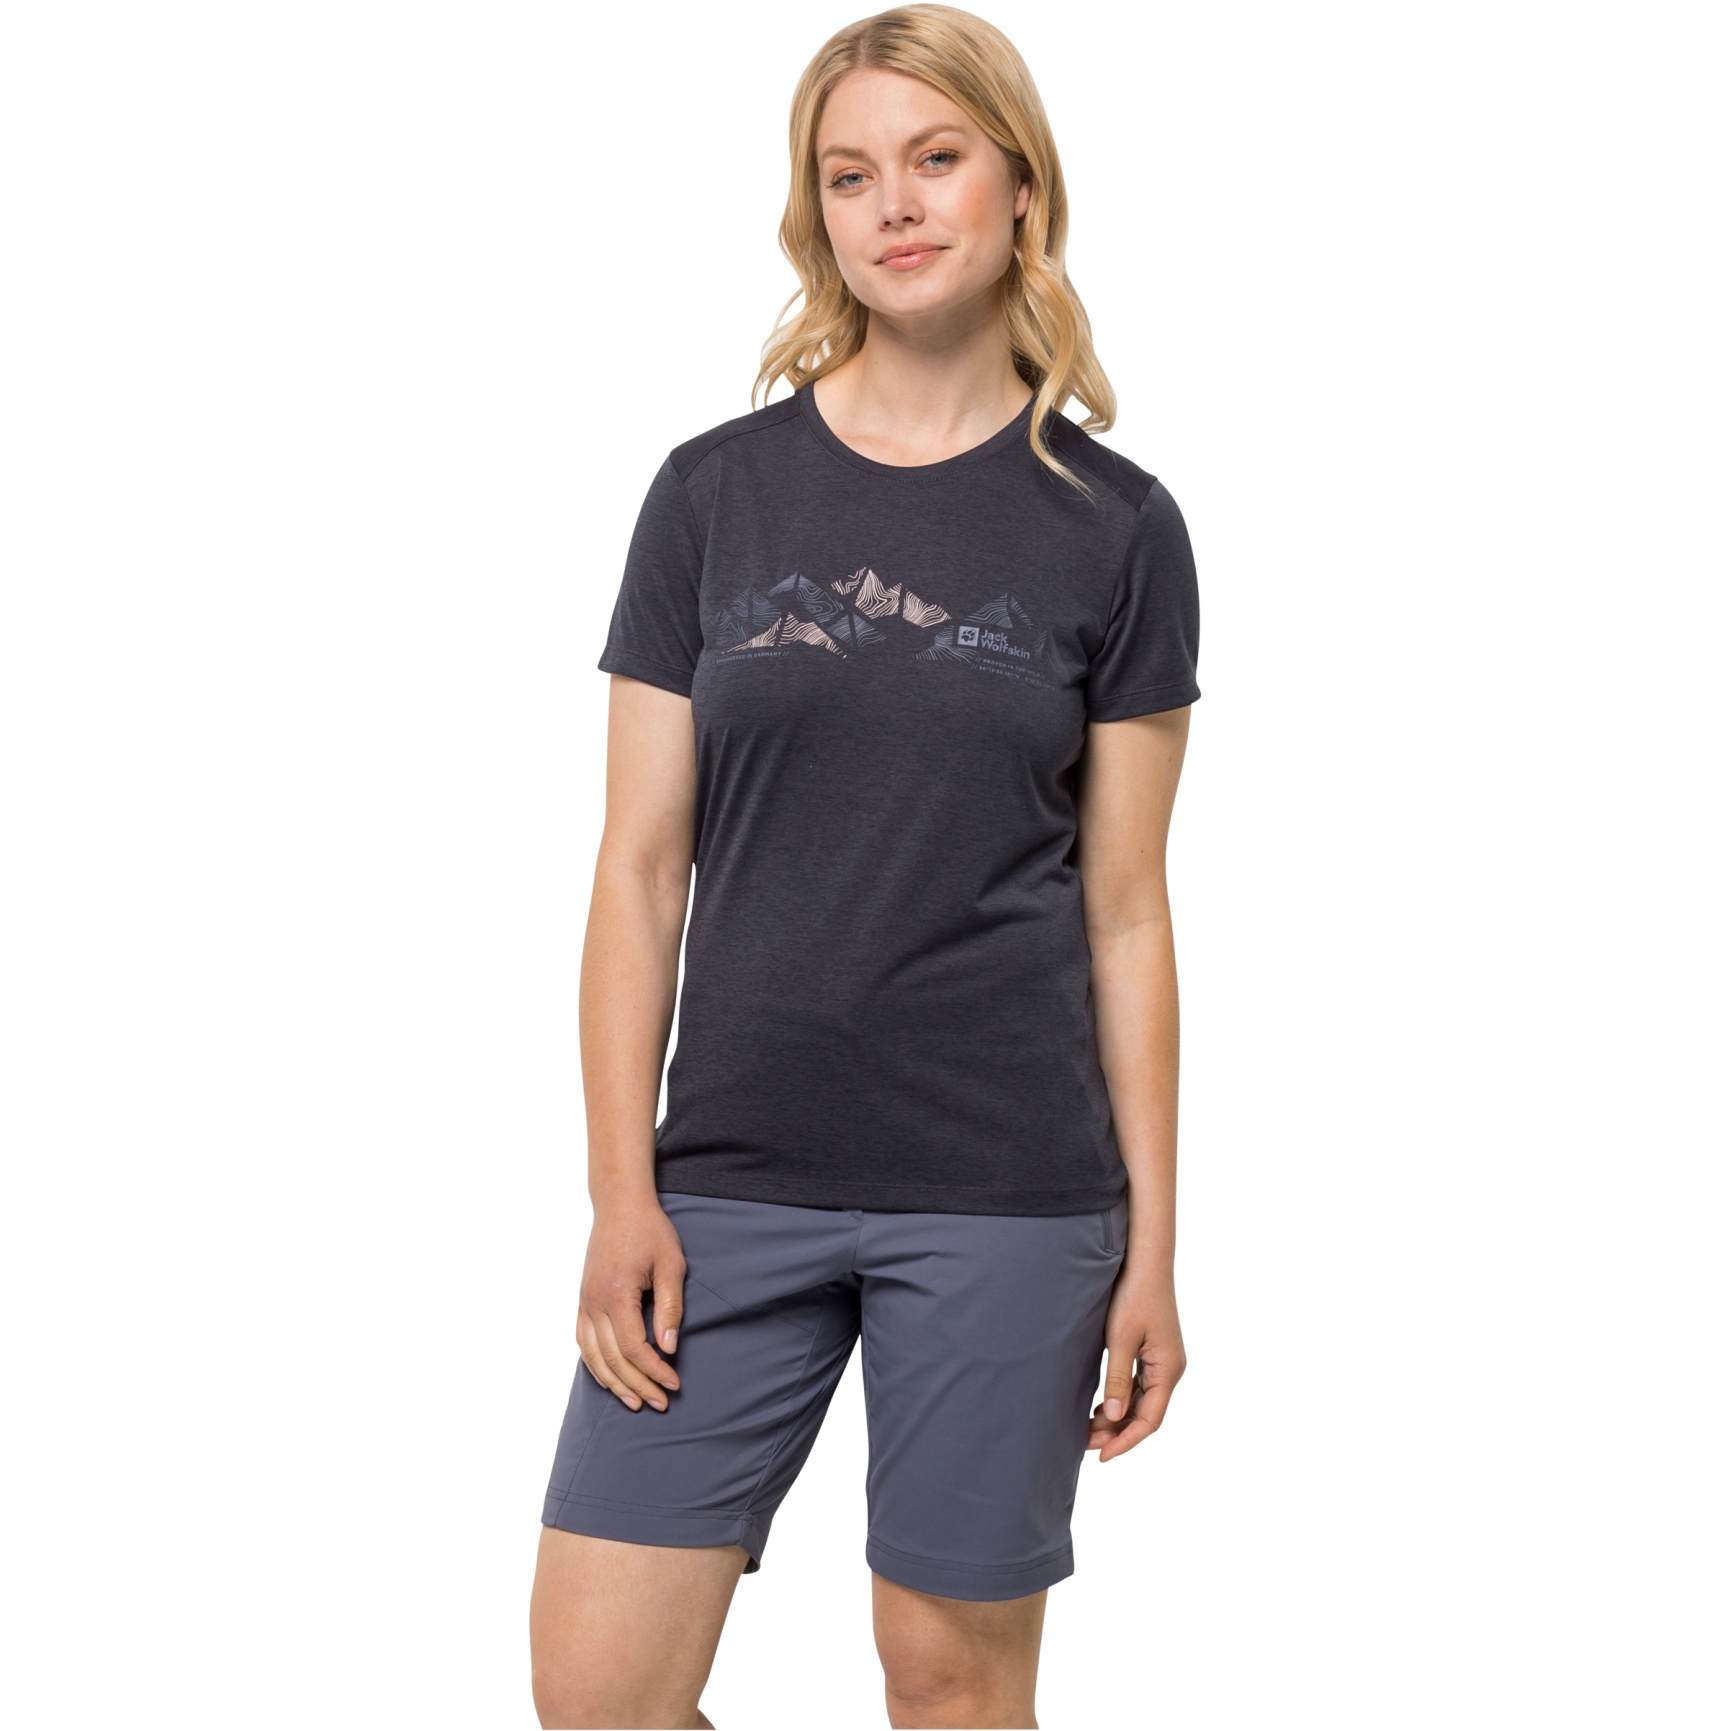 Picture of Jack Wolfskin Crosstrail Graphic T-Shirt Women - graphite